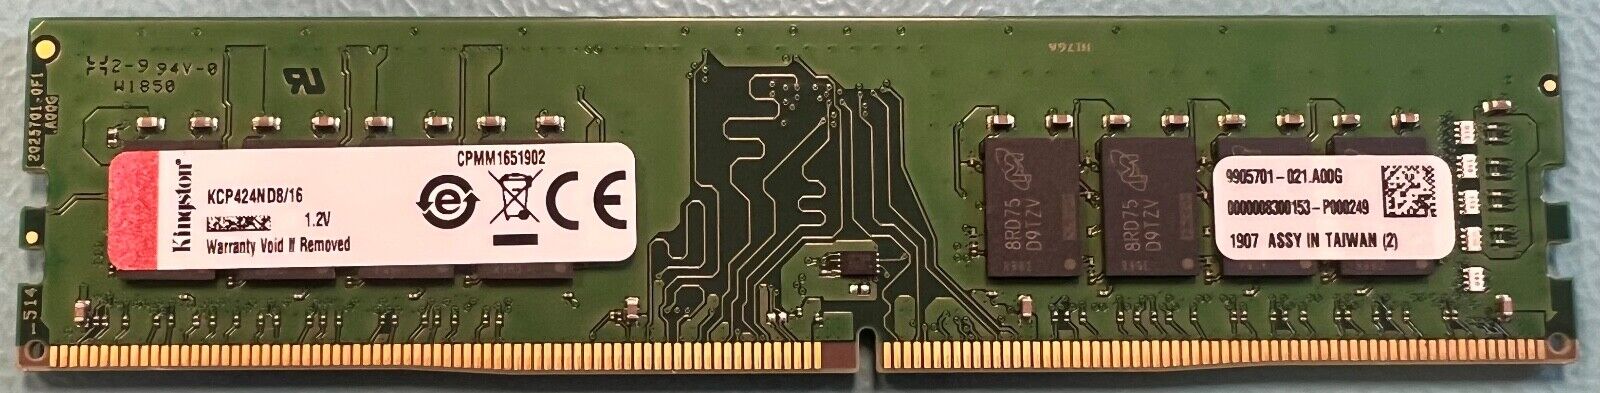 Kingston KCP424ND8/16 16GB DDR4-2400 PC4-19200 UDIMM Memory Module RAM